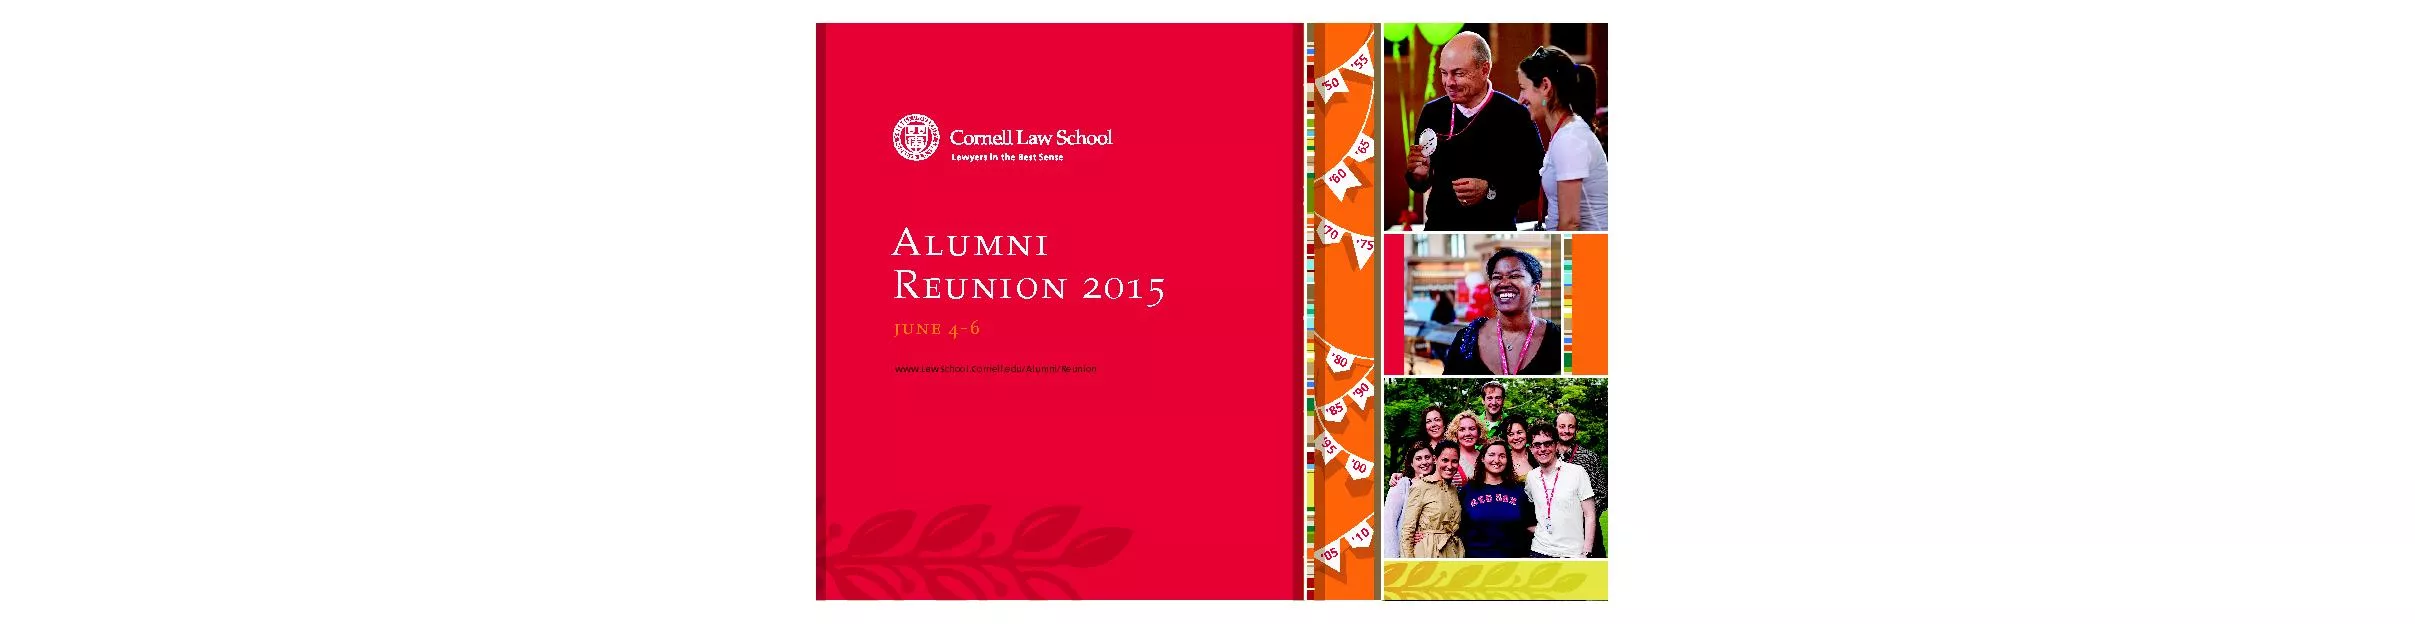 www.LawSchool.Cornell.edu/Alumni/Reunion